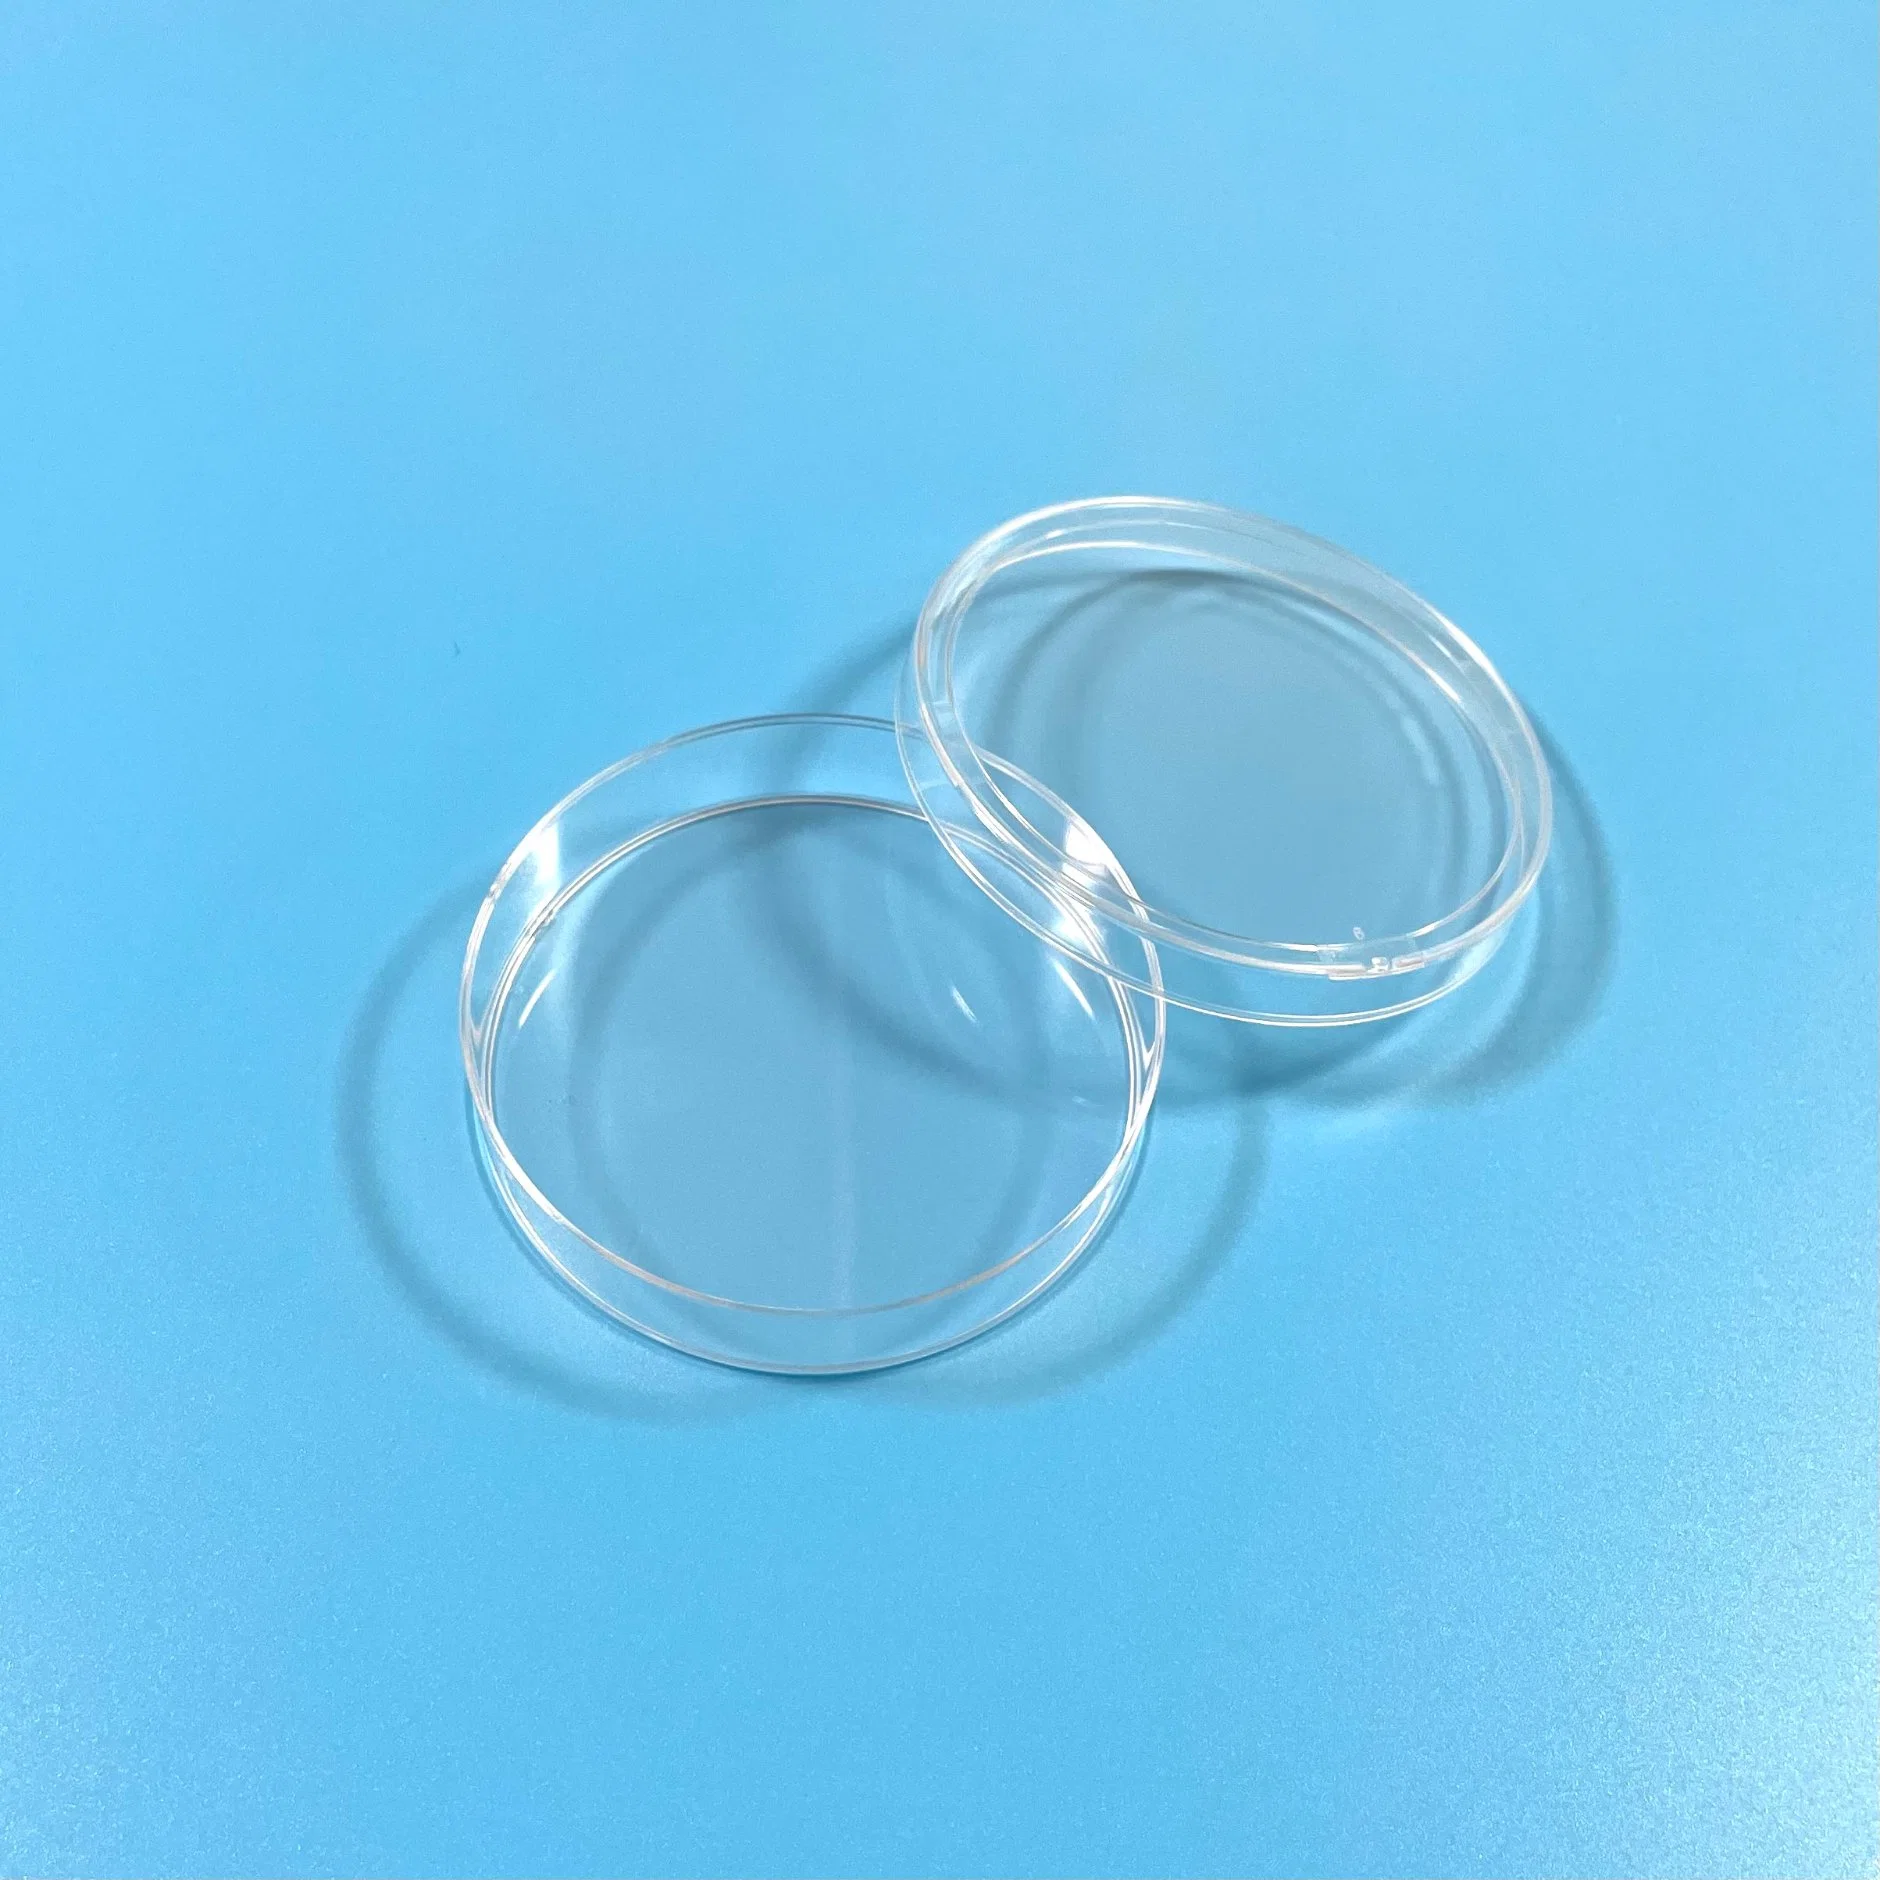 7cm 70mm Tissue Petri Dish PS Sterile Laboratory Medical Plastic Product Plastic Bacteria Culture Petri Dish